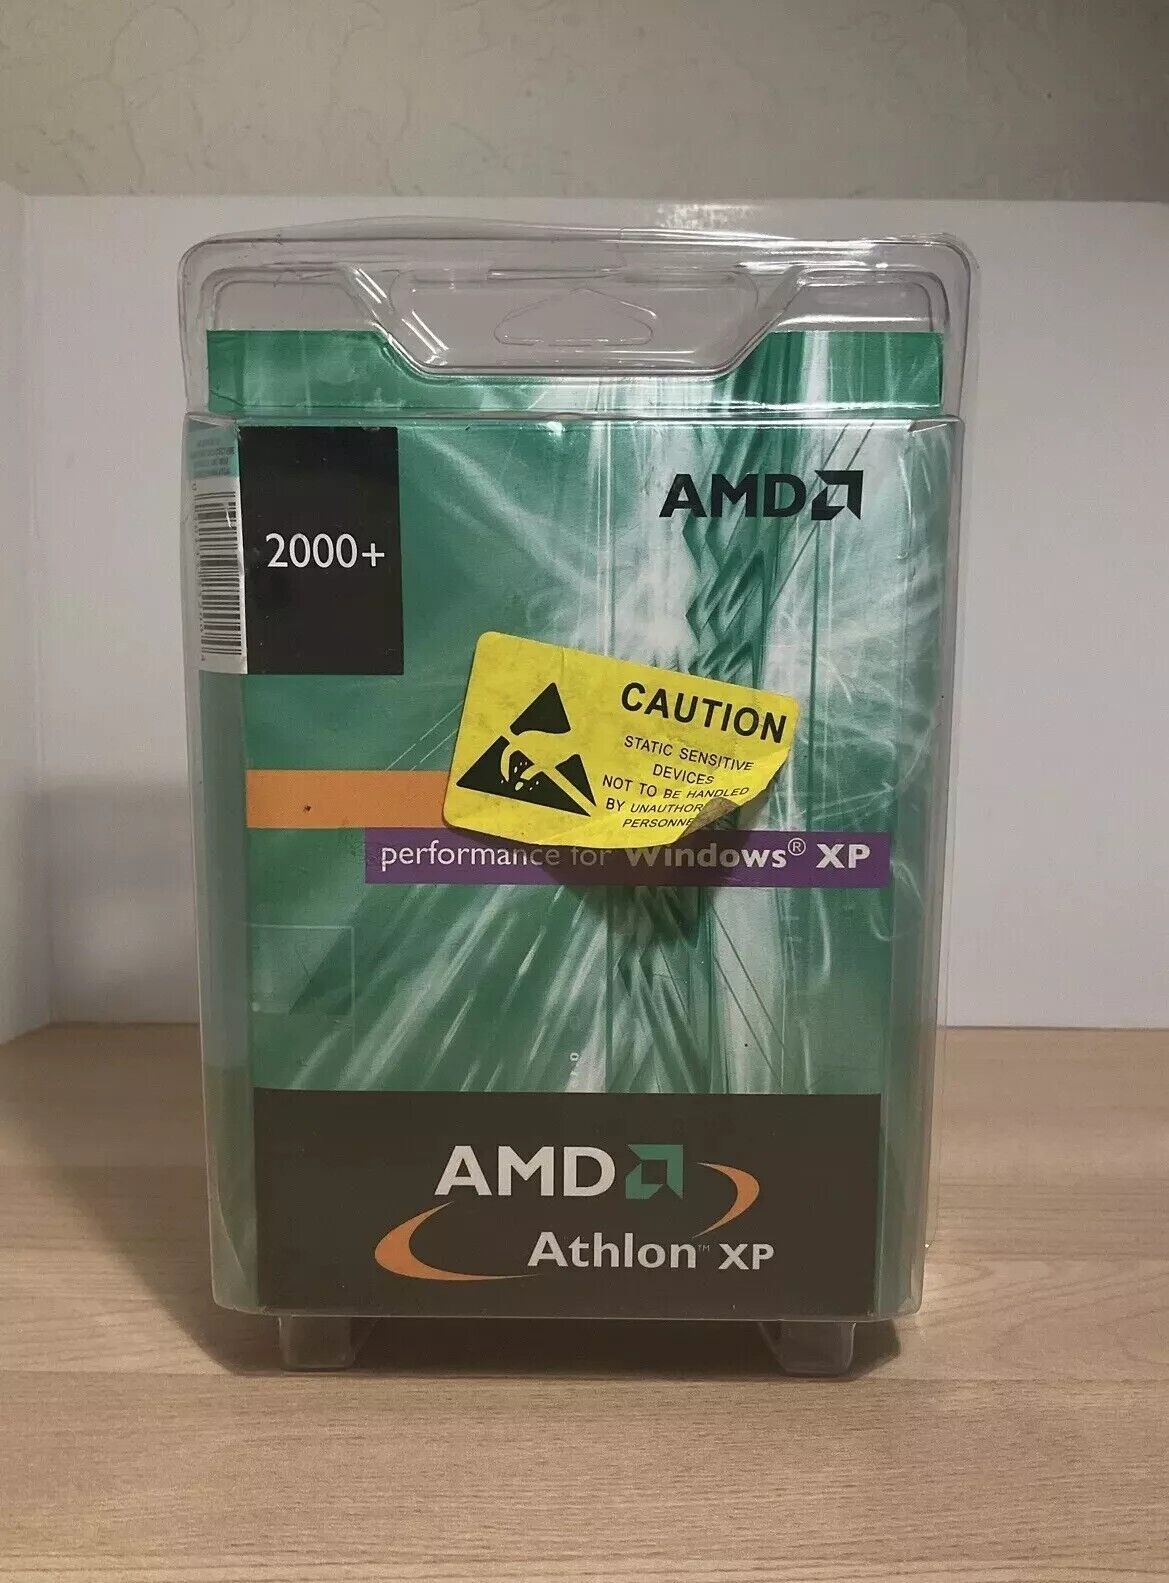 AMD Athlon XP Processor 2000+ Quantispeed Tailored for Microsoft Windows XP NEW